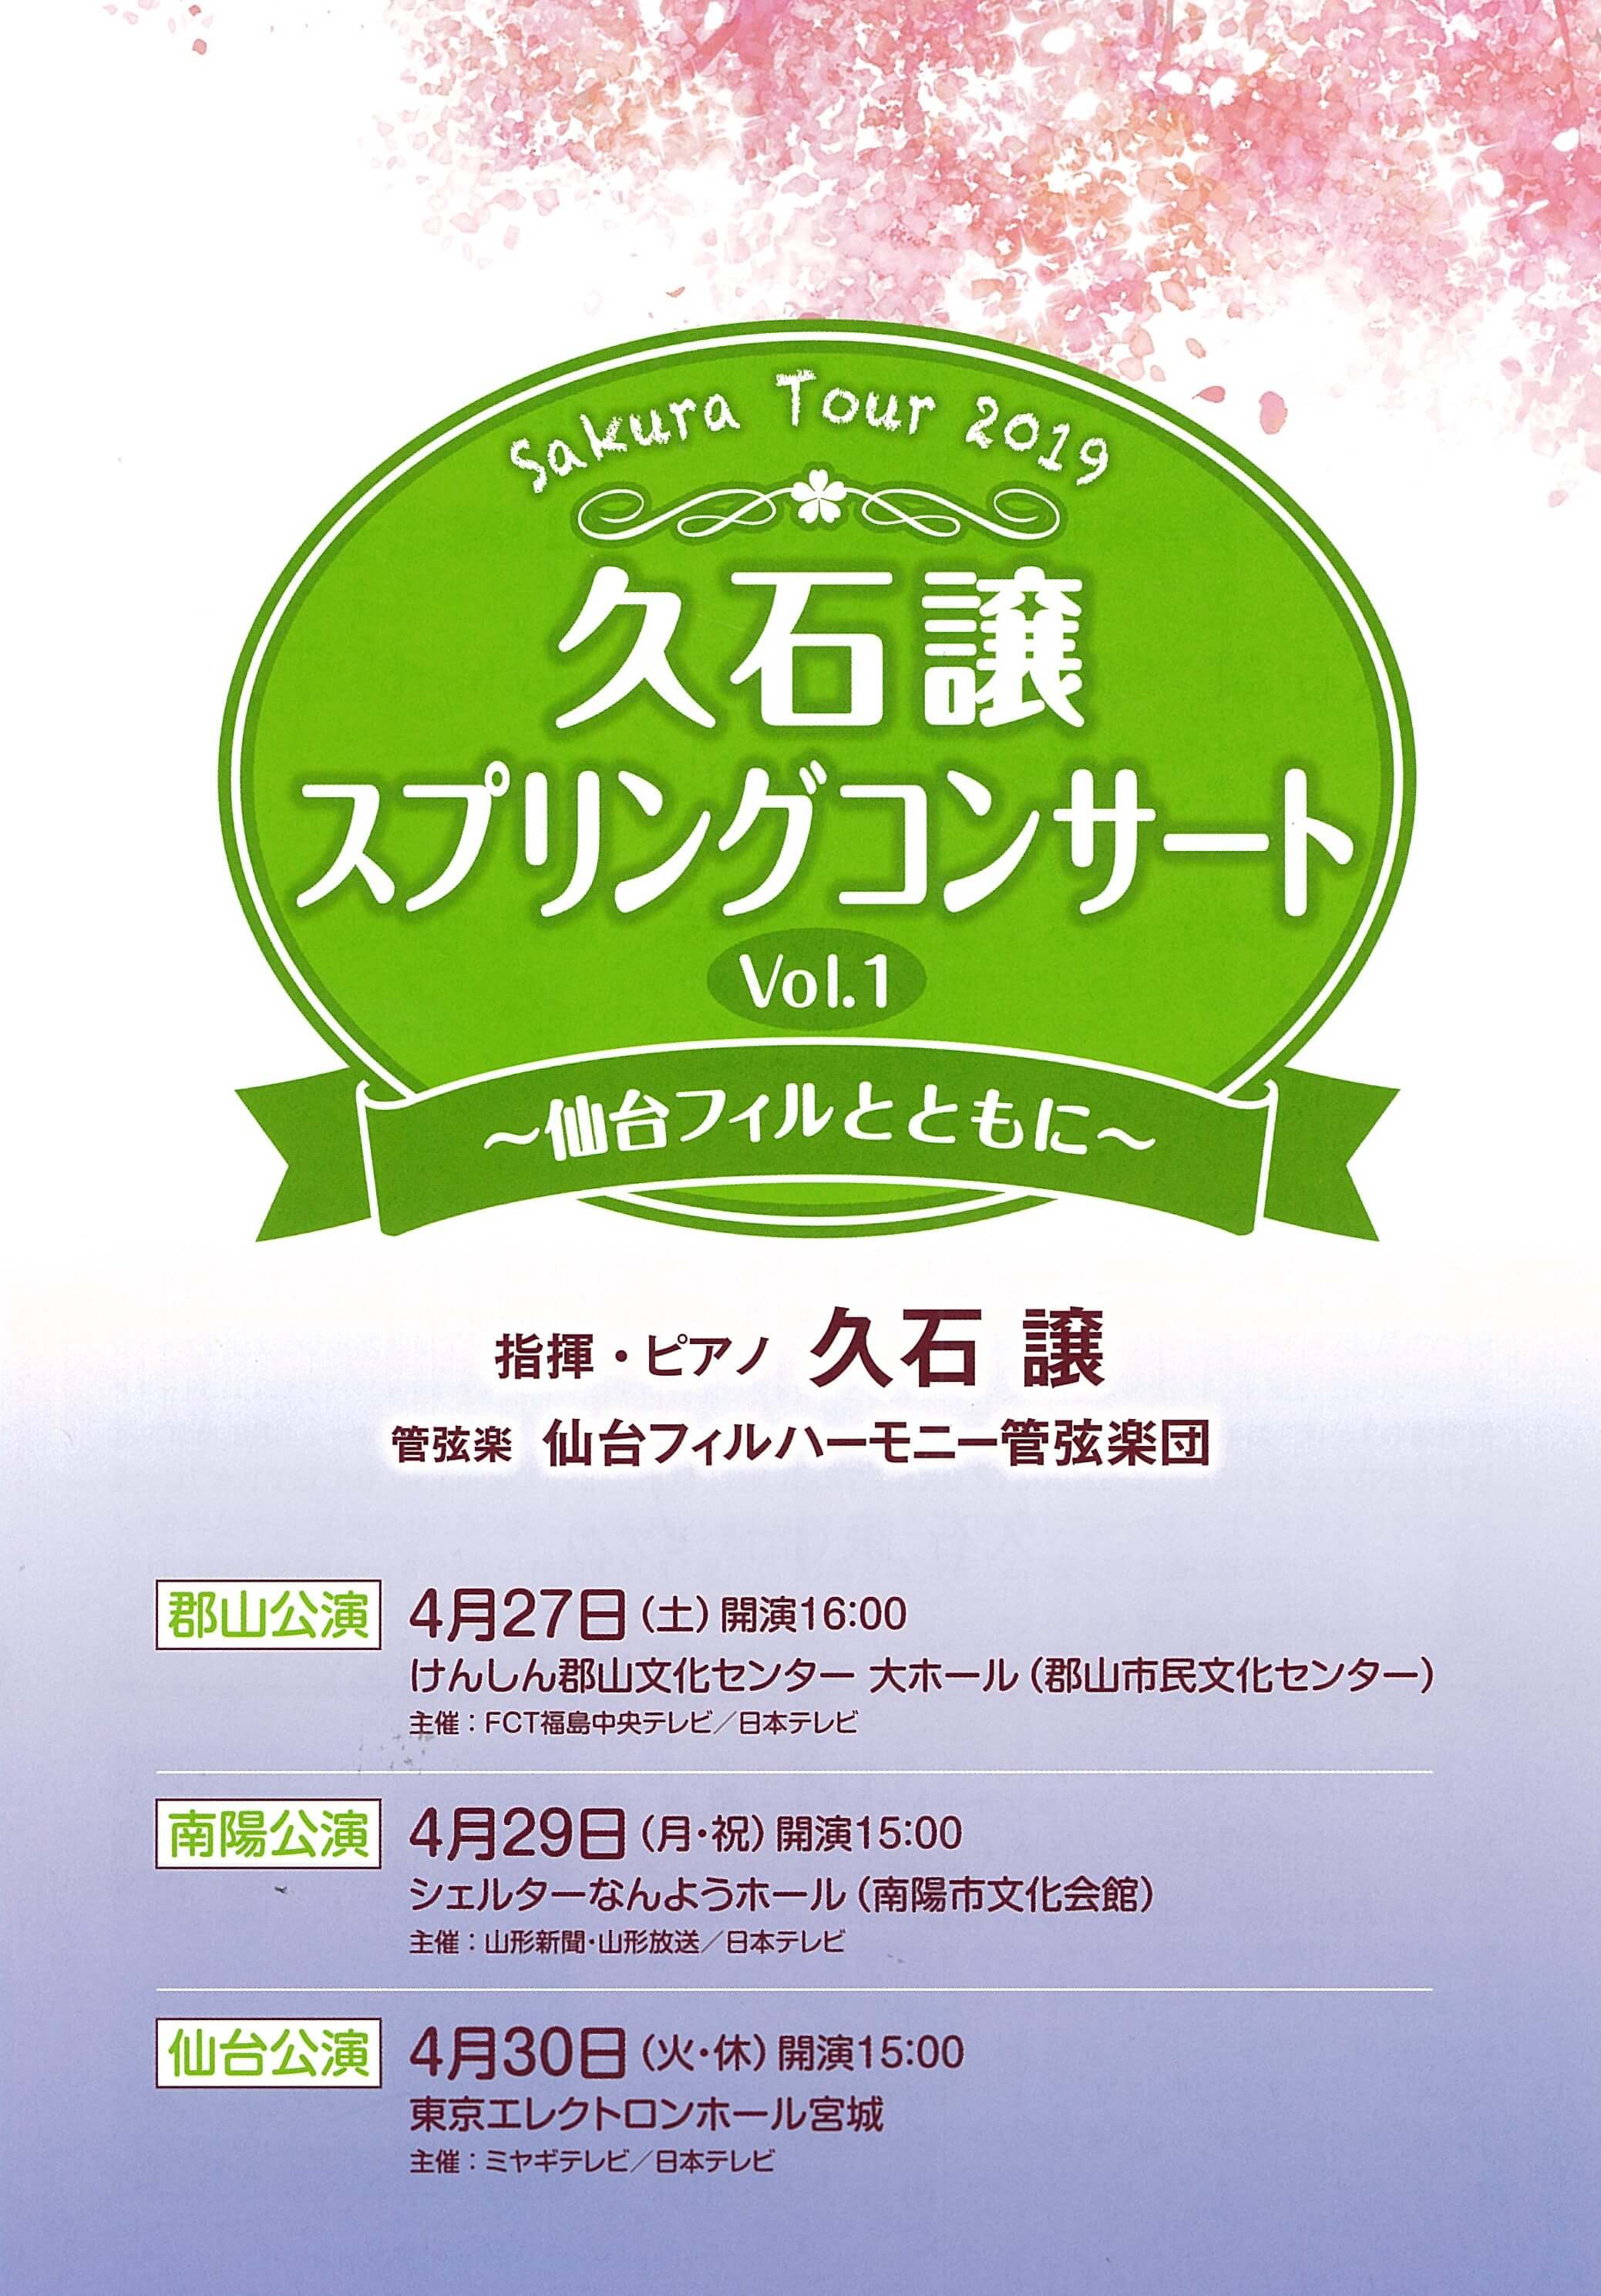 Blog Sakura Tour 19 久石譲 スプリングコンサート Vol 1 仙台フィルとともに コンサート レポート 久石譲ファンサイト 響きはじめの部屋